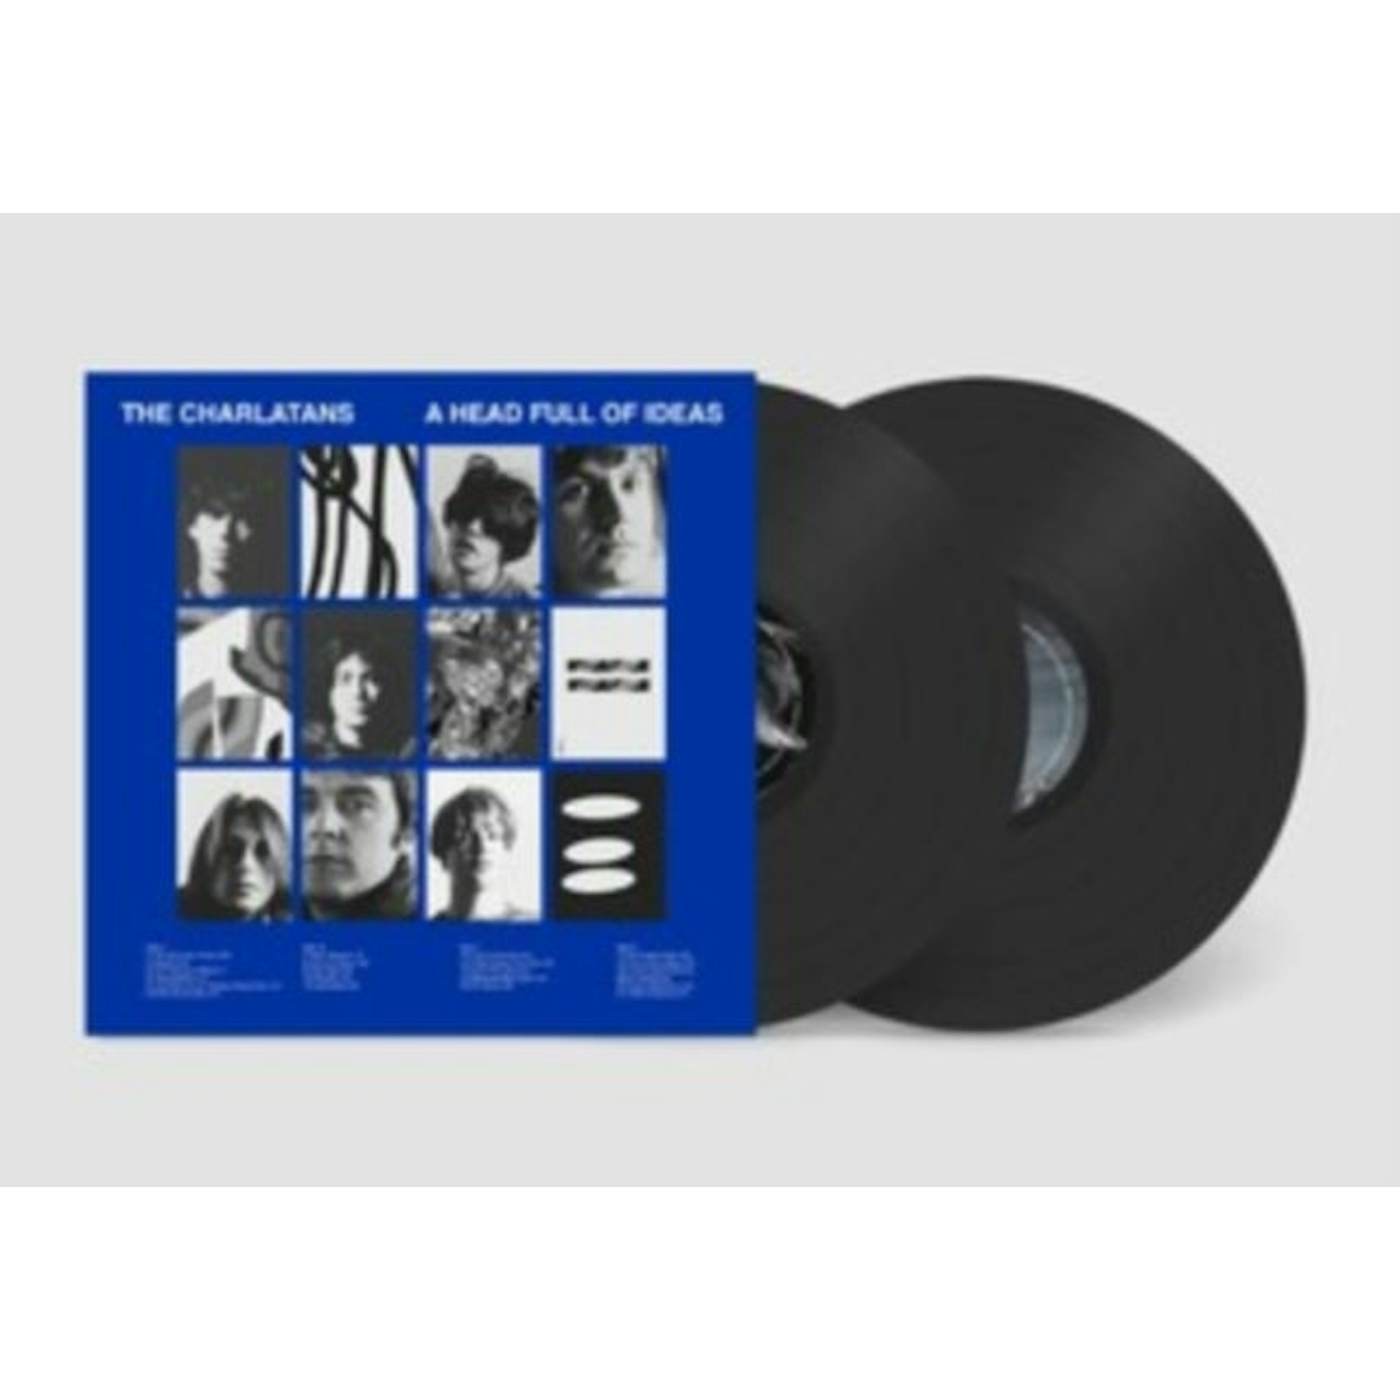 The Charlatans LP Vinyl Record - A Head Full Of Ideas